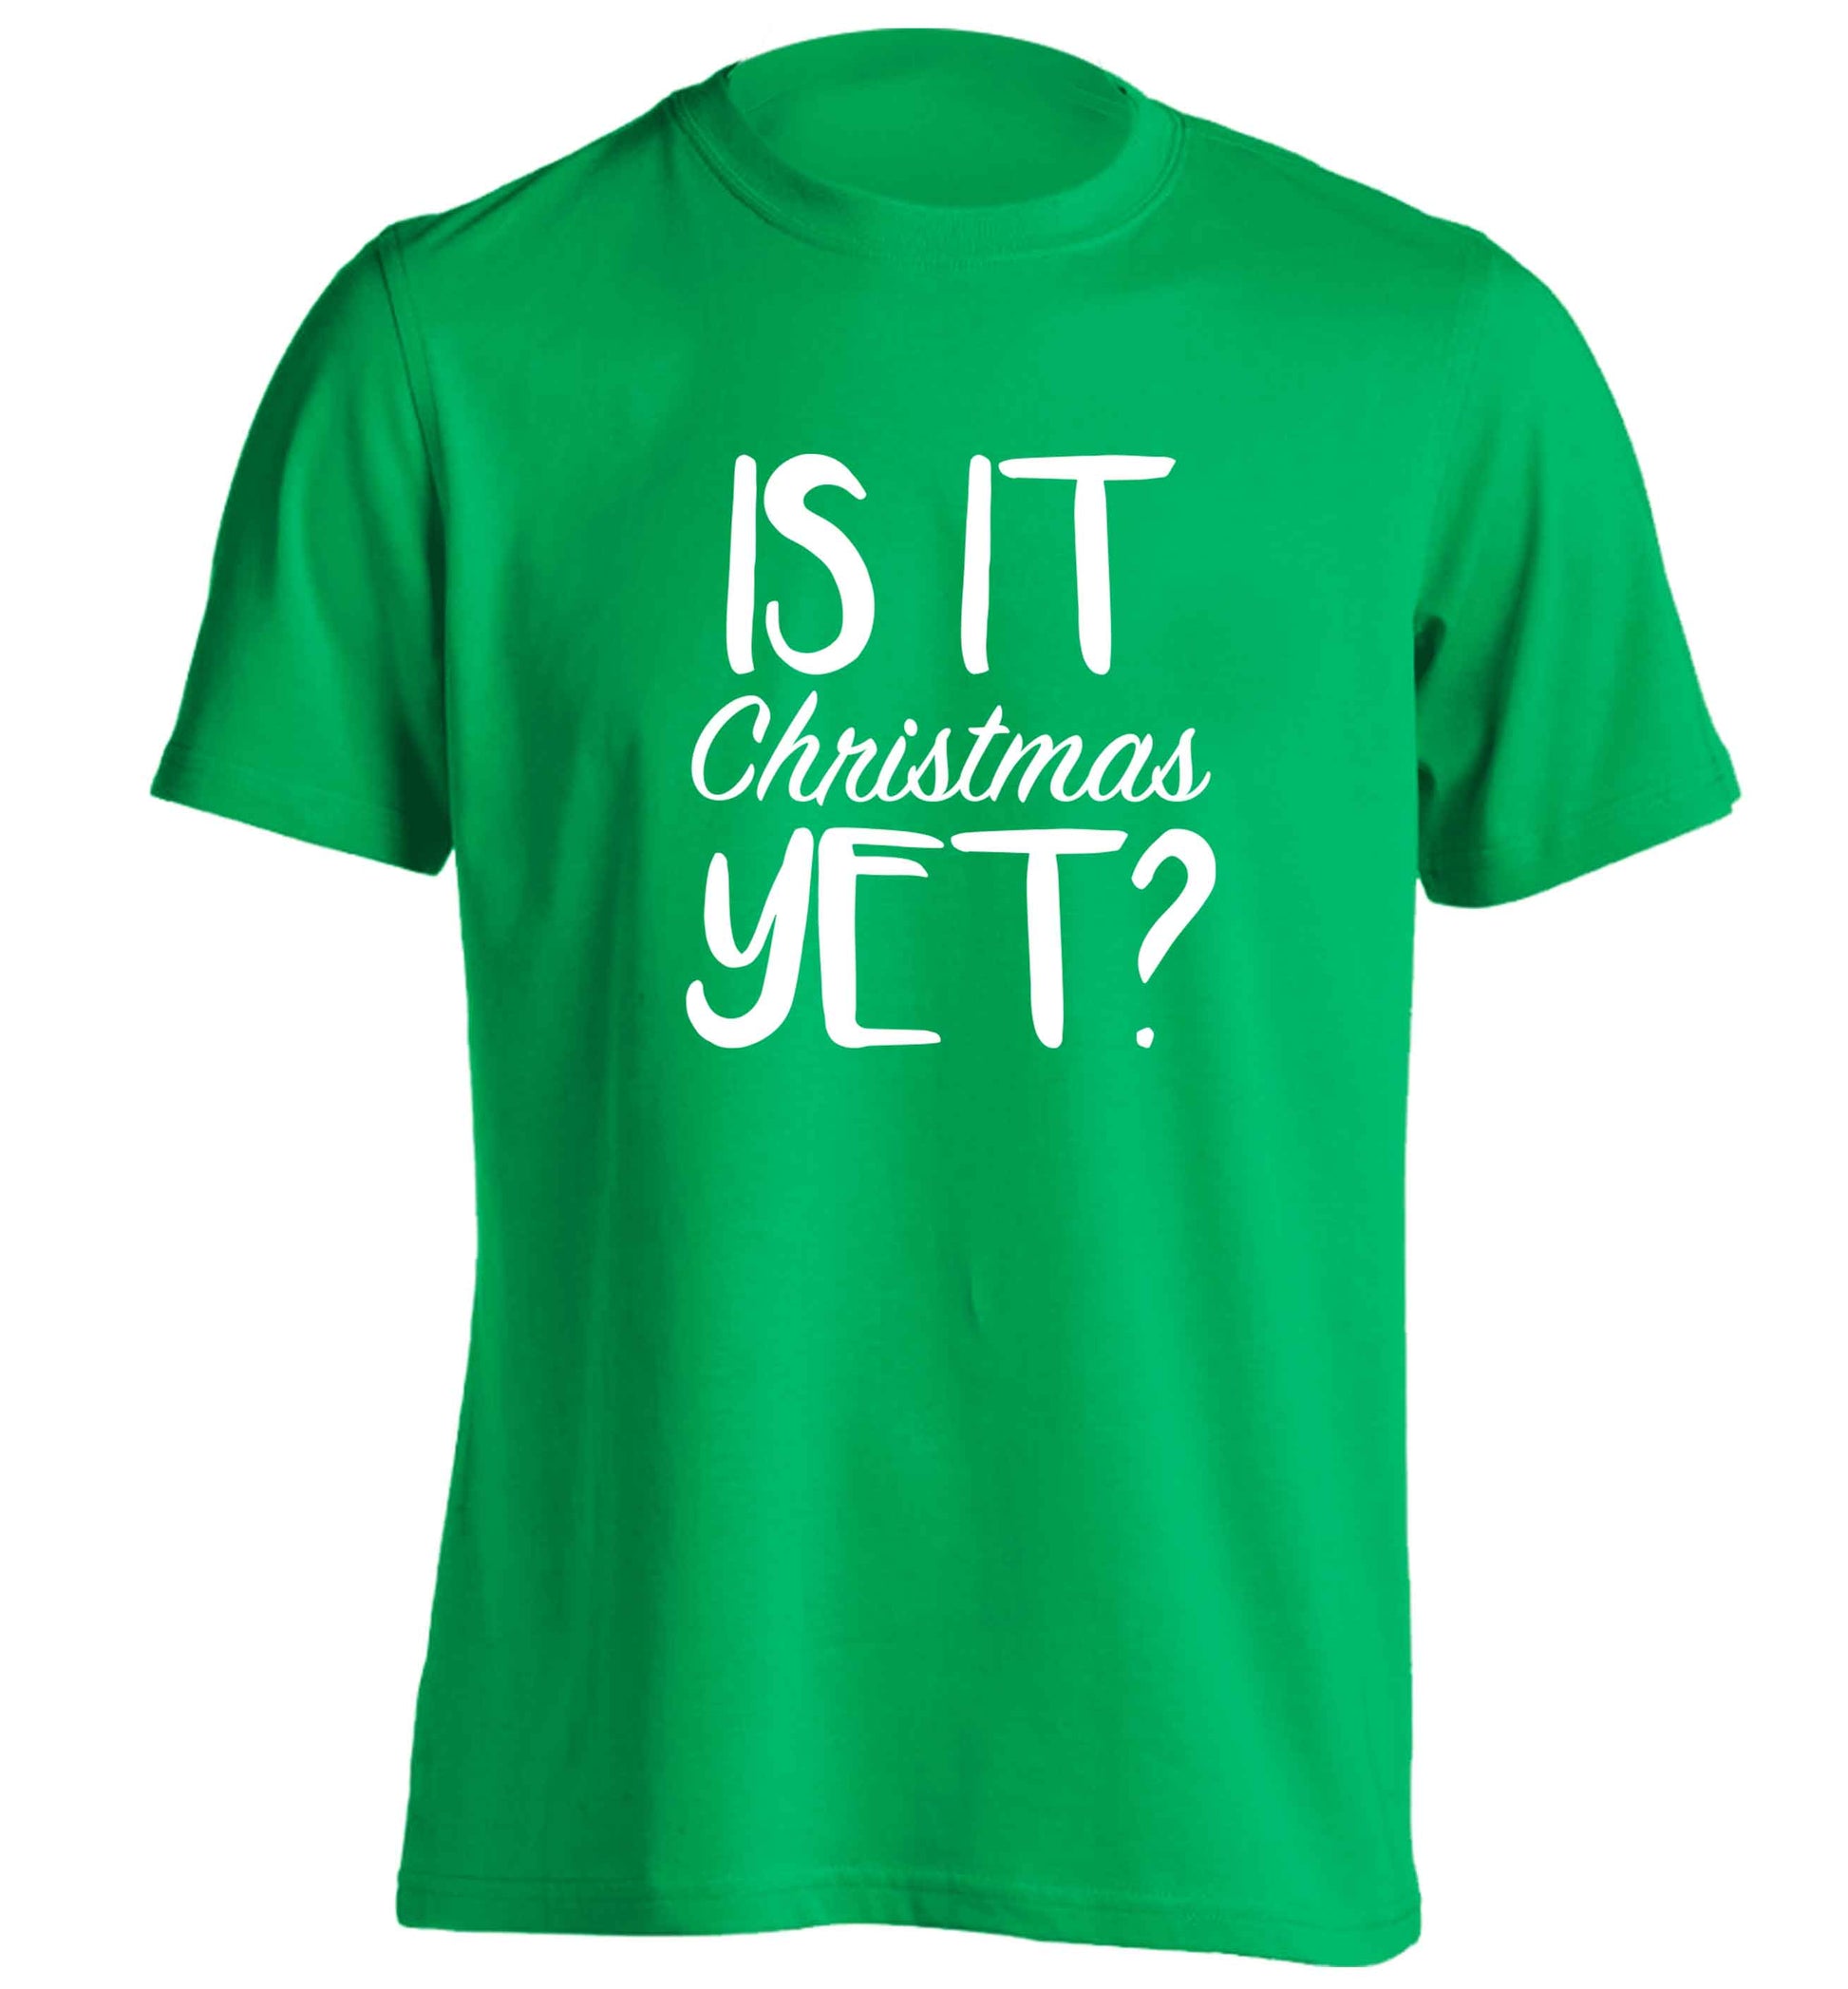 Is it Christmas yet? adults unisex green Tshirt 2XL